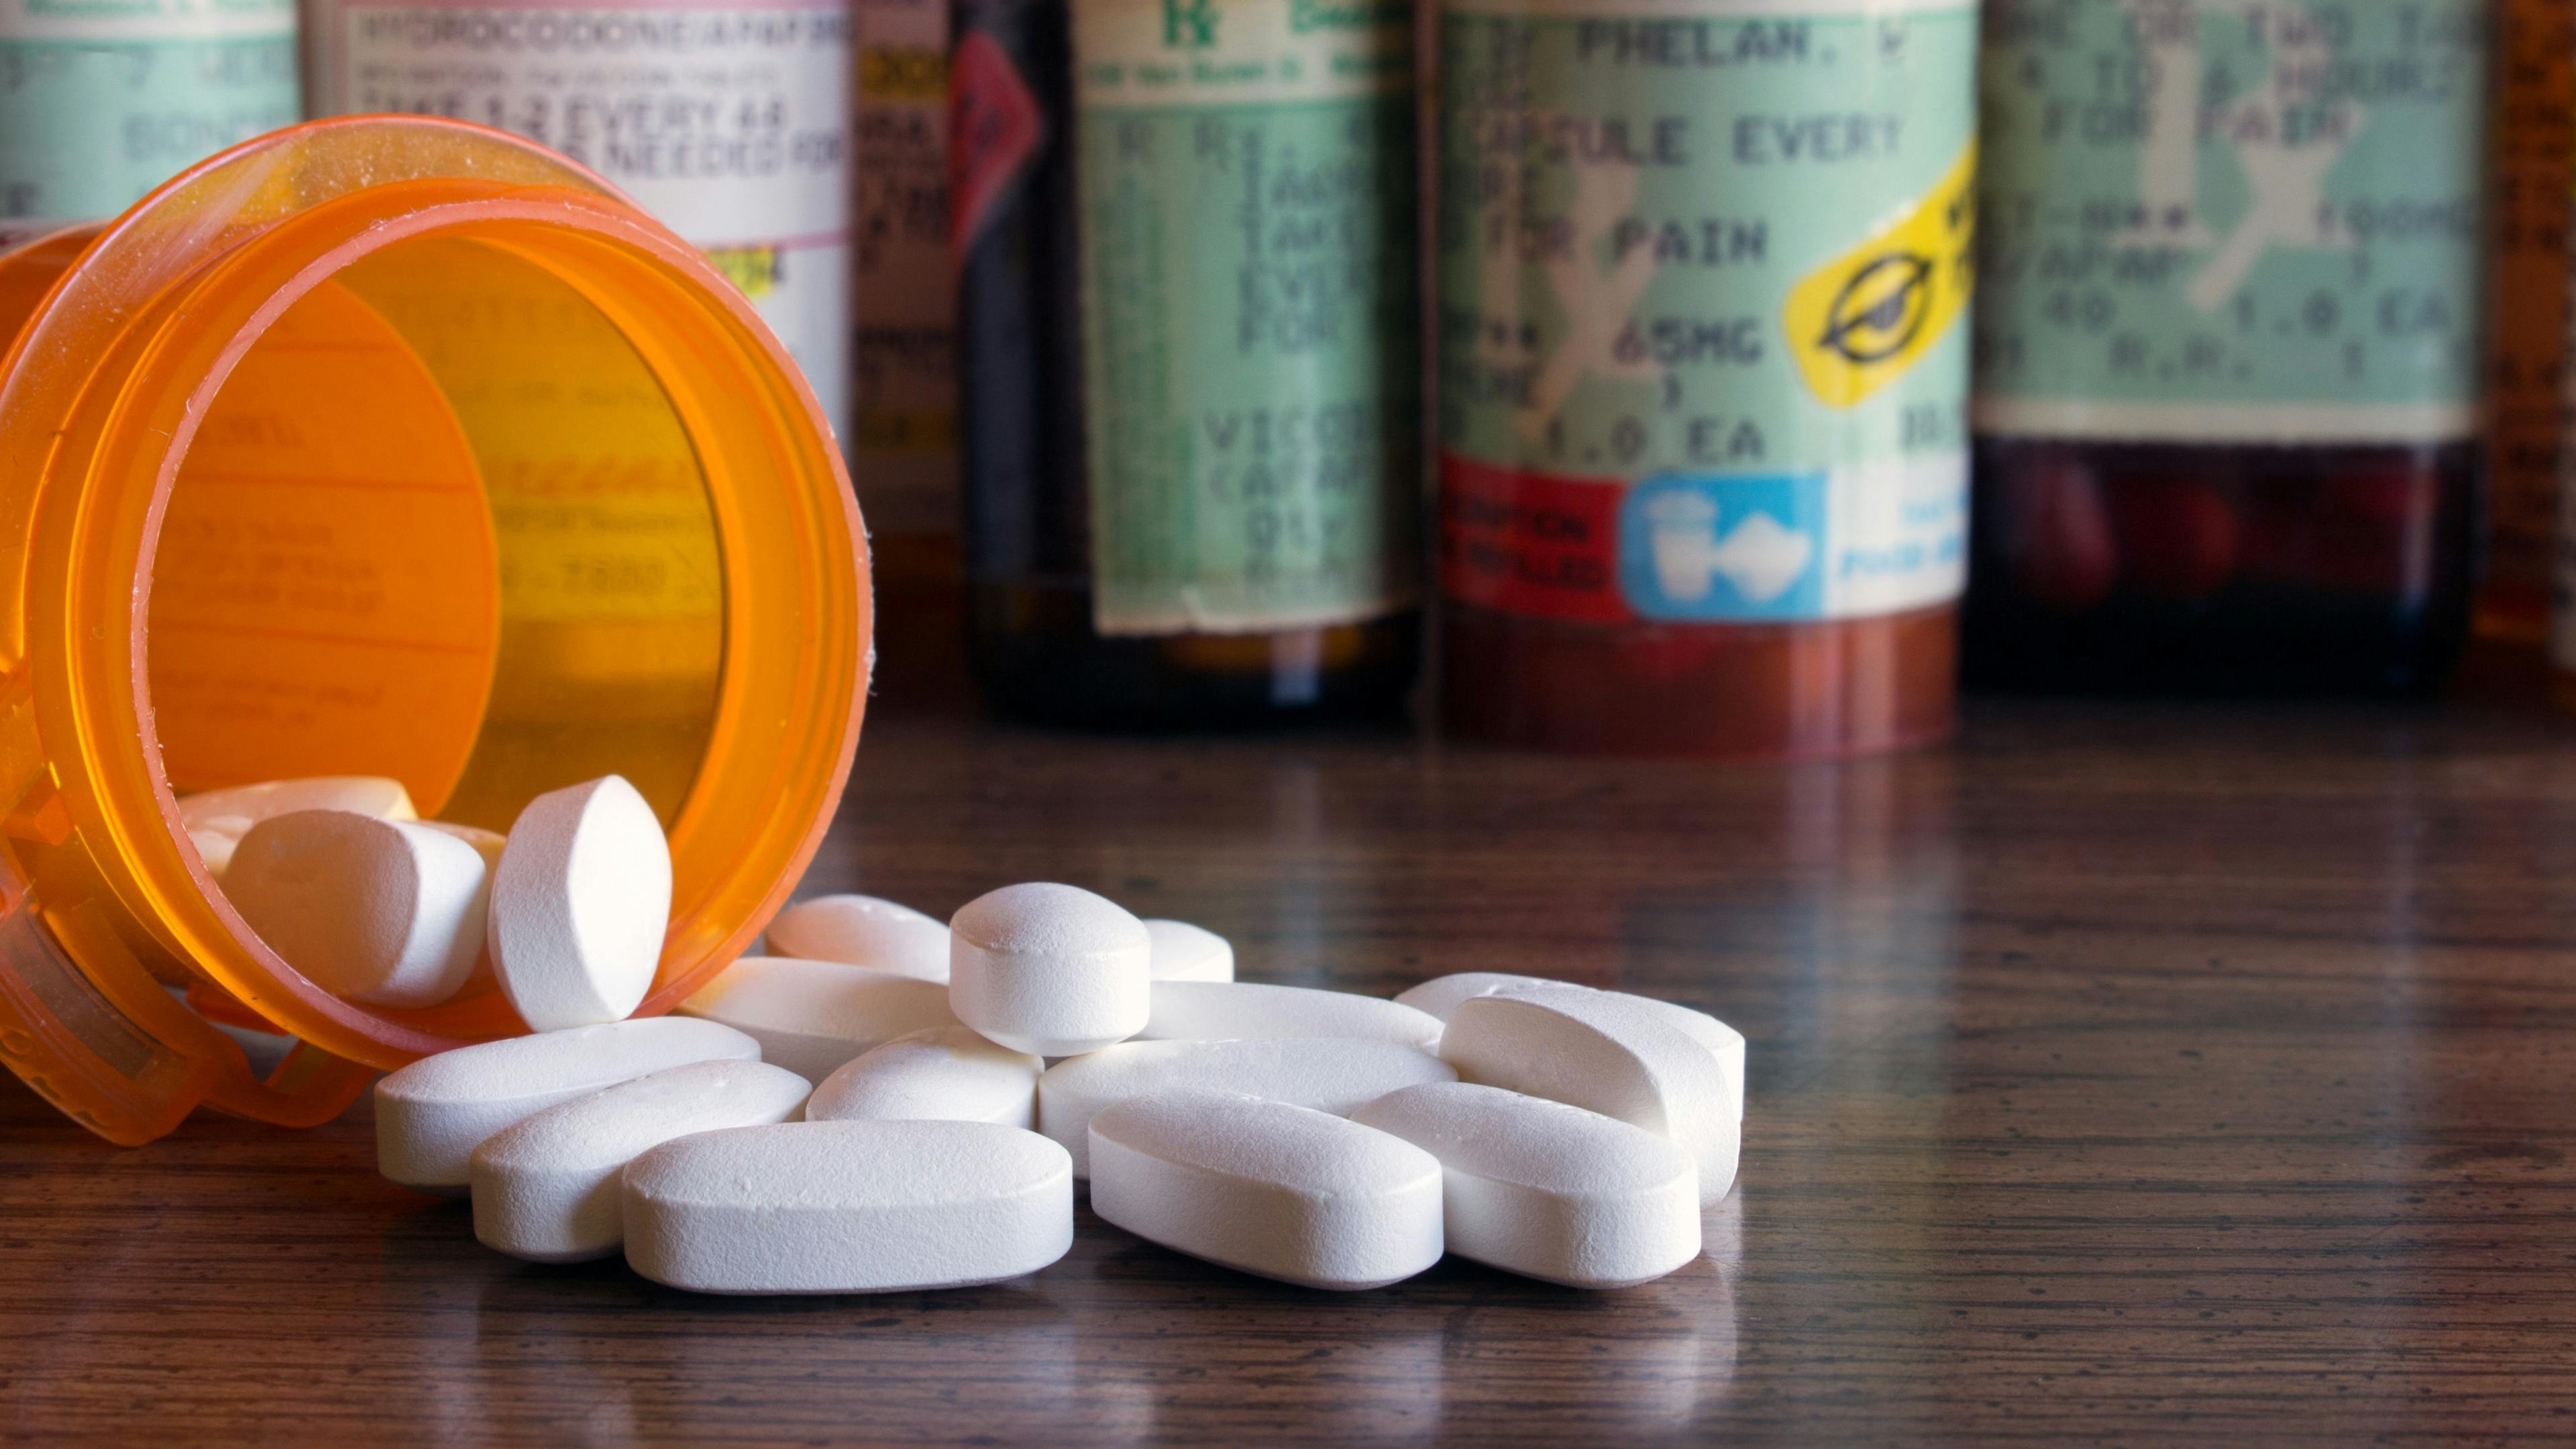 Provide Education to Help Prevent Drug Overdoses